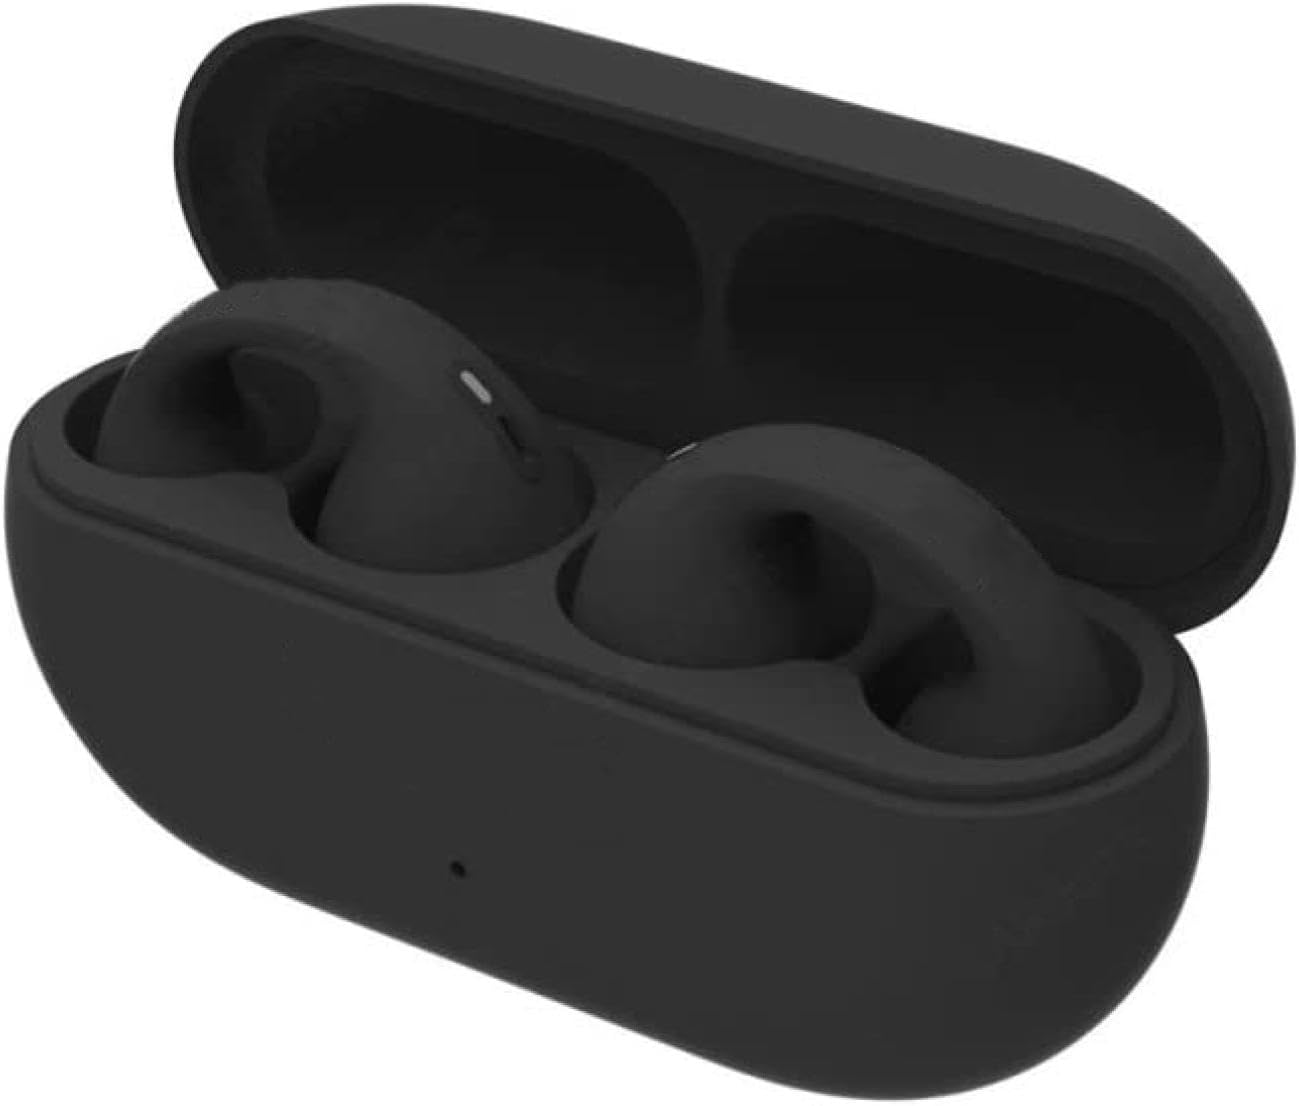 AMBIE Ear Cuffs Wireless